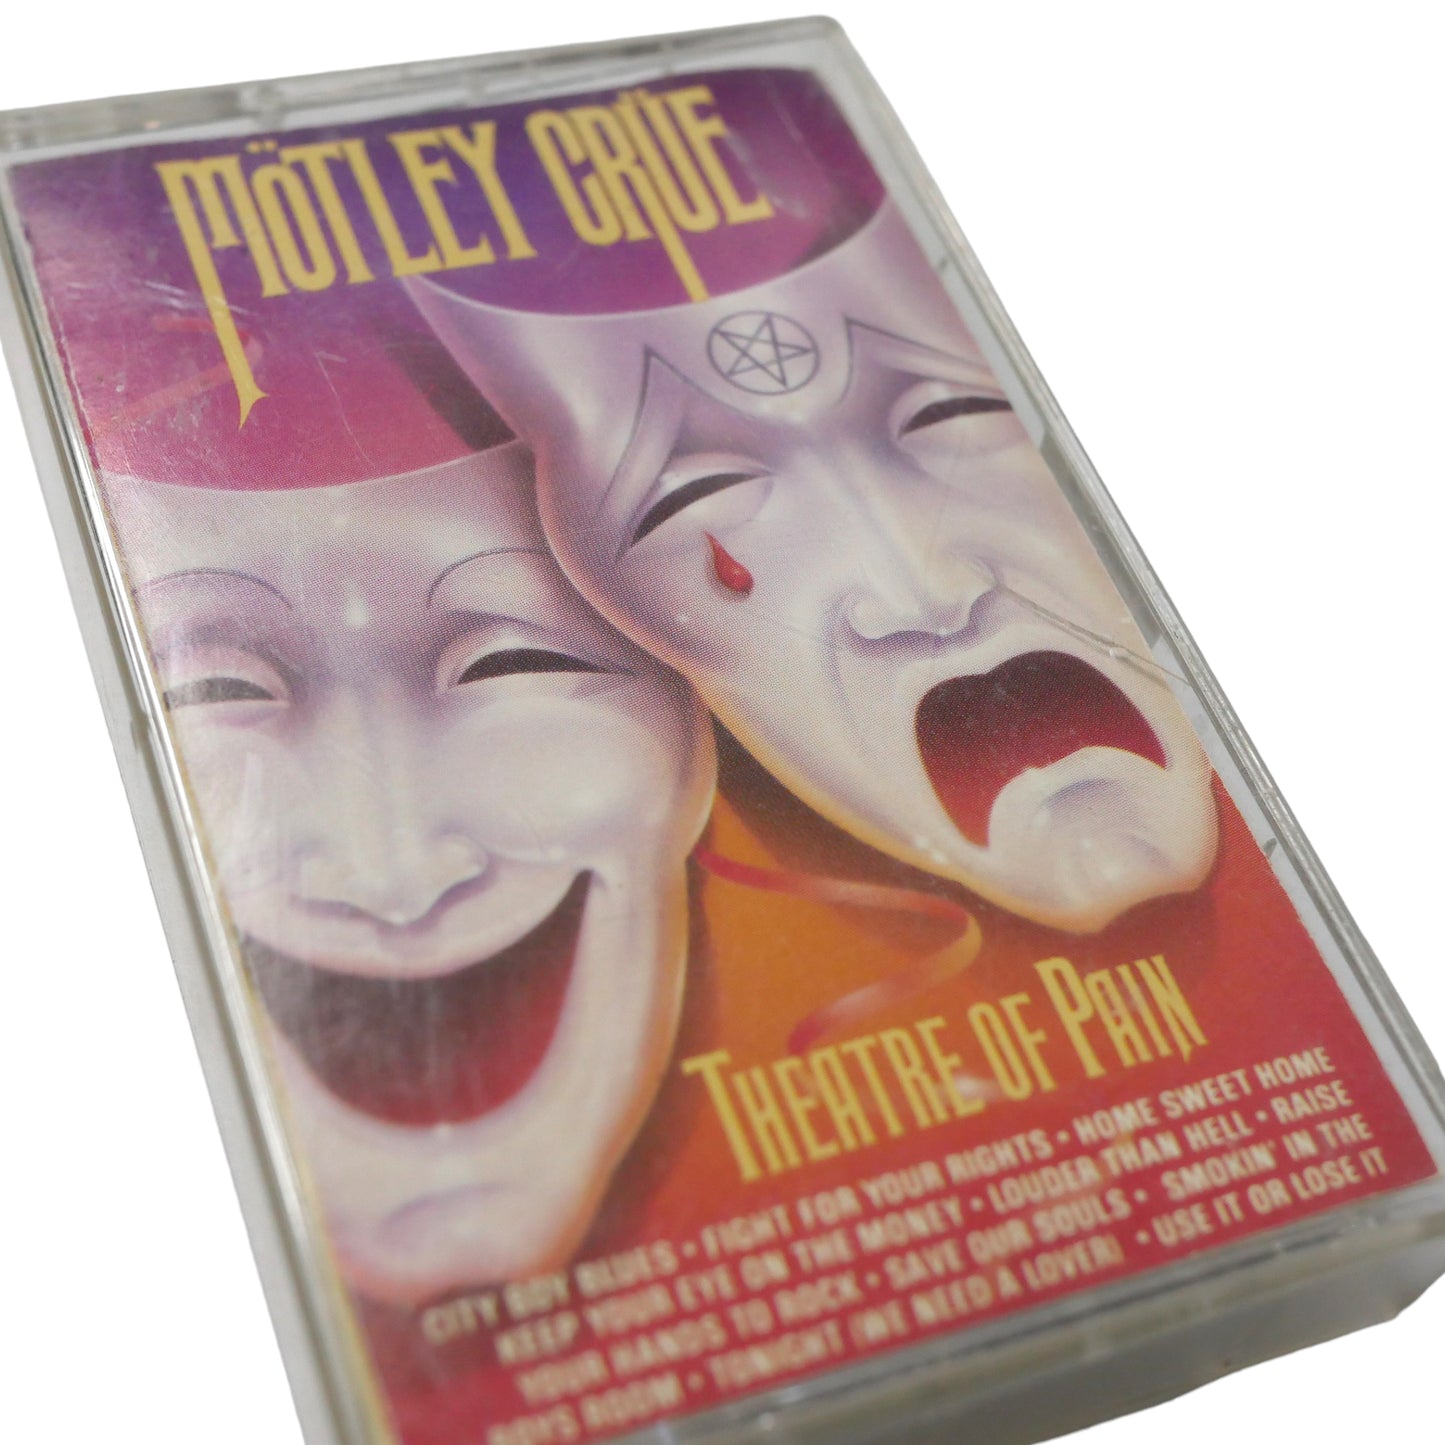 Motley Crue Theatre Of Pain Cassette